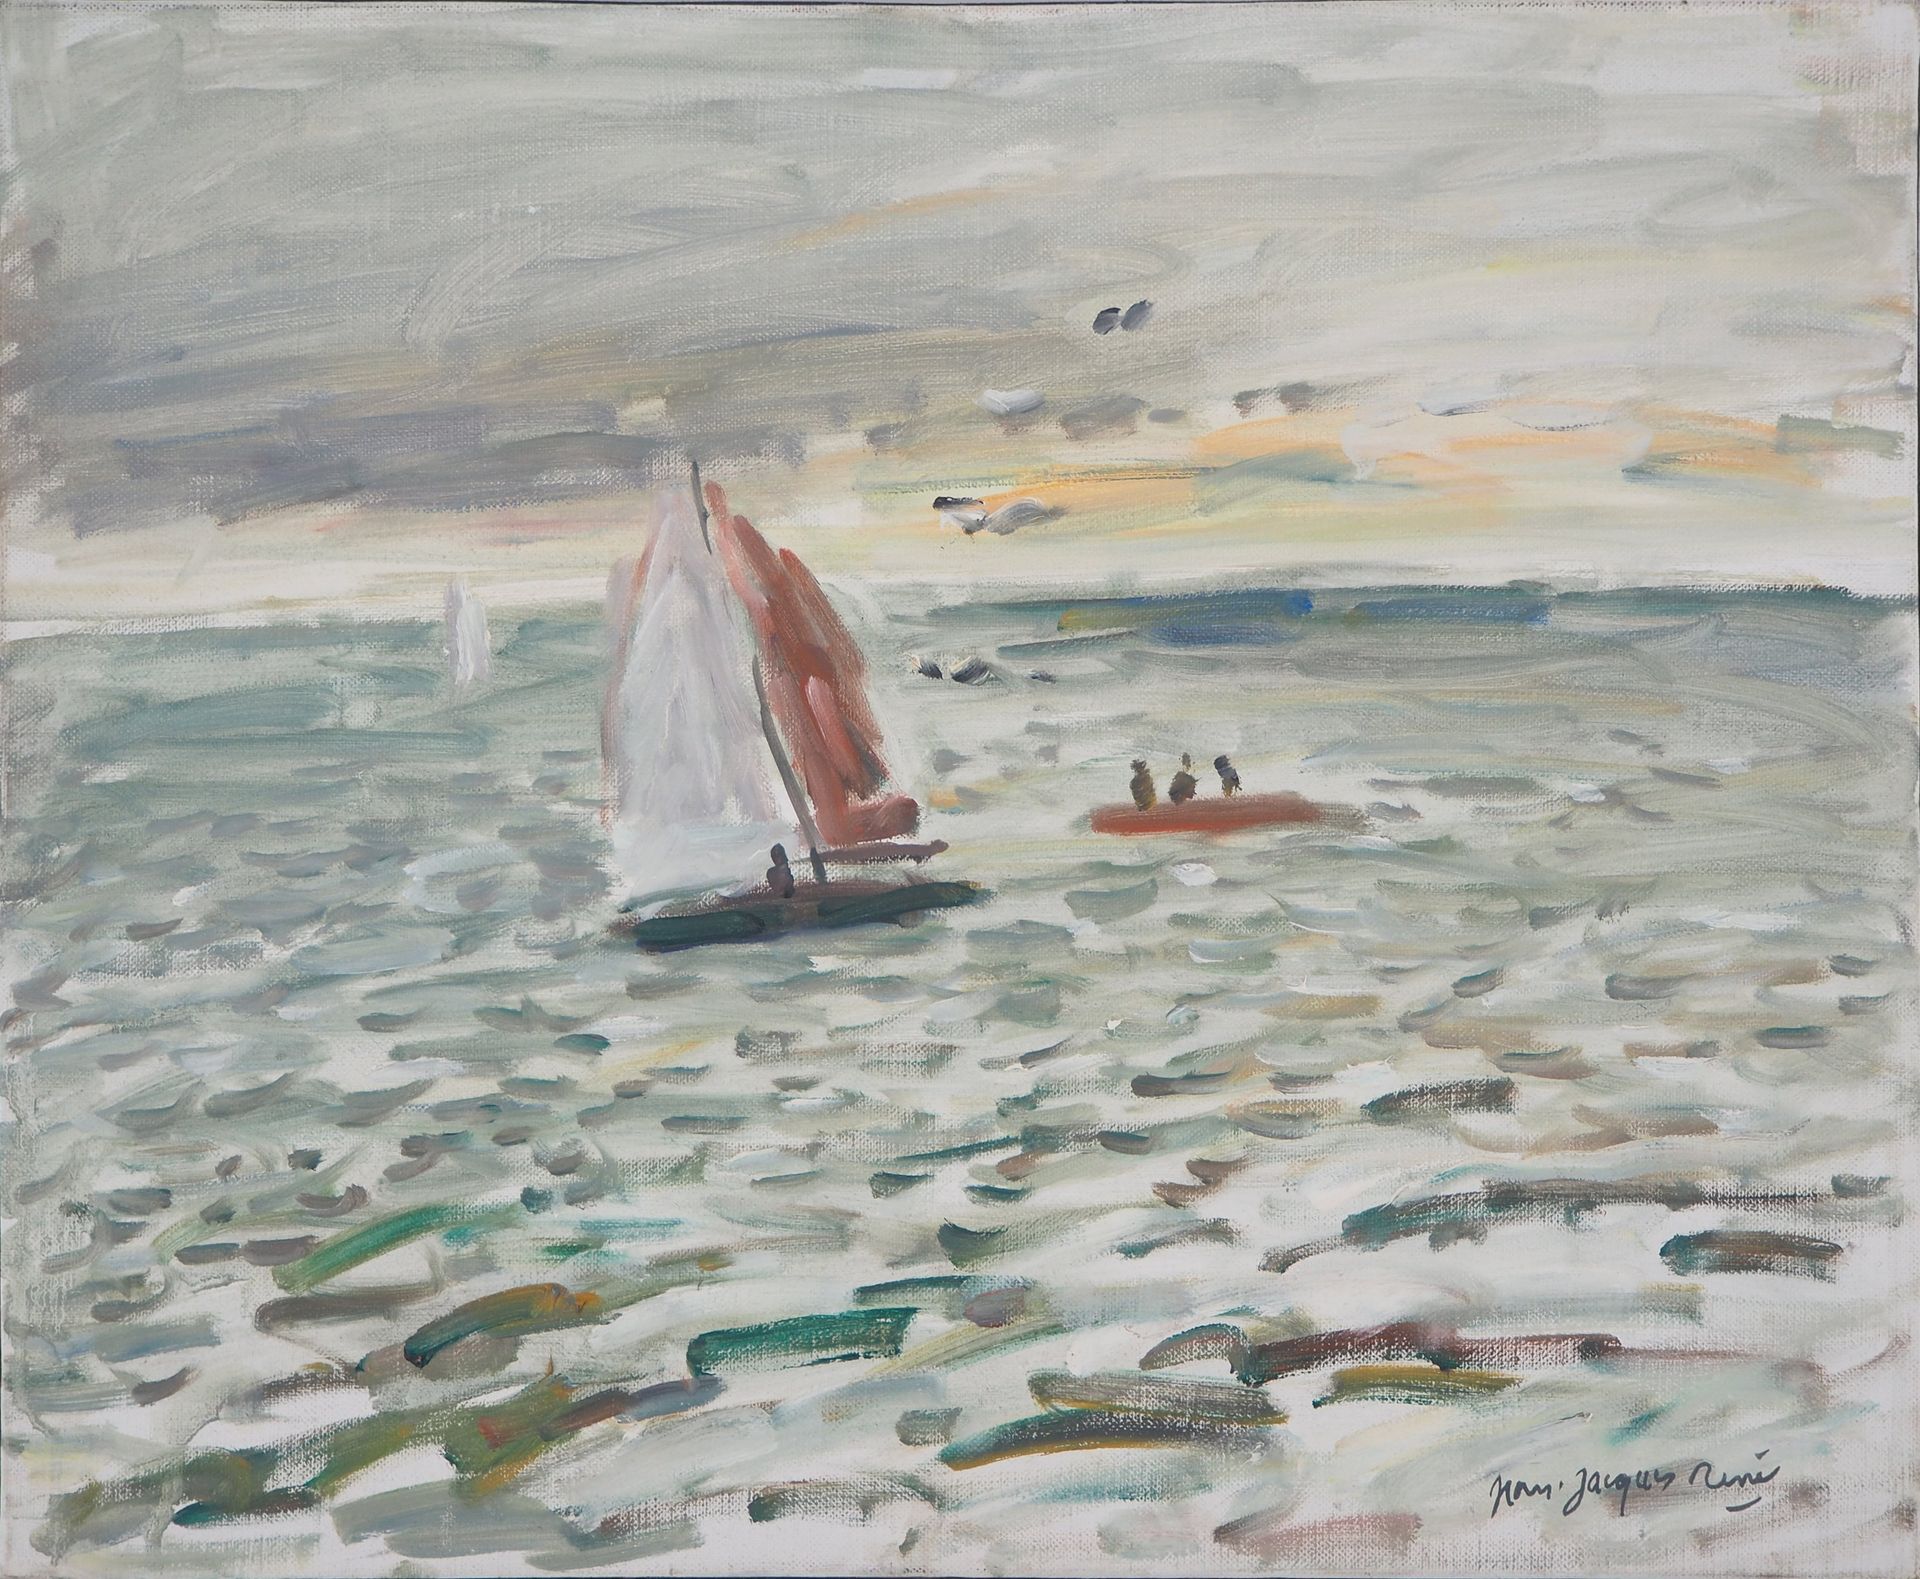 Jean-Jacques RENE 让-雅克-雷内 (1943)

帆船在海上

布面油画

左下方有签名

格式 8F : 38 x 46 cm

 带框：5&hellip;